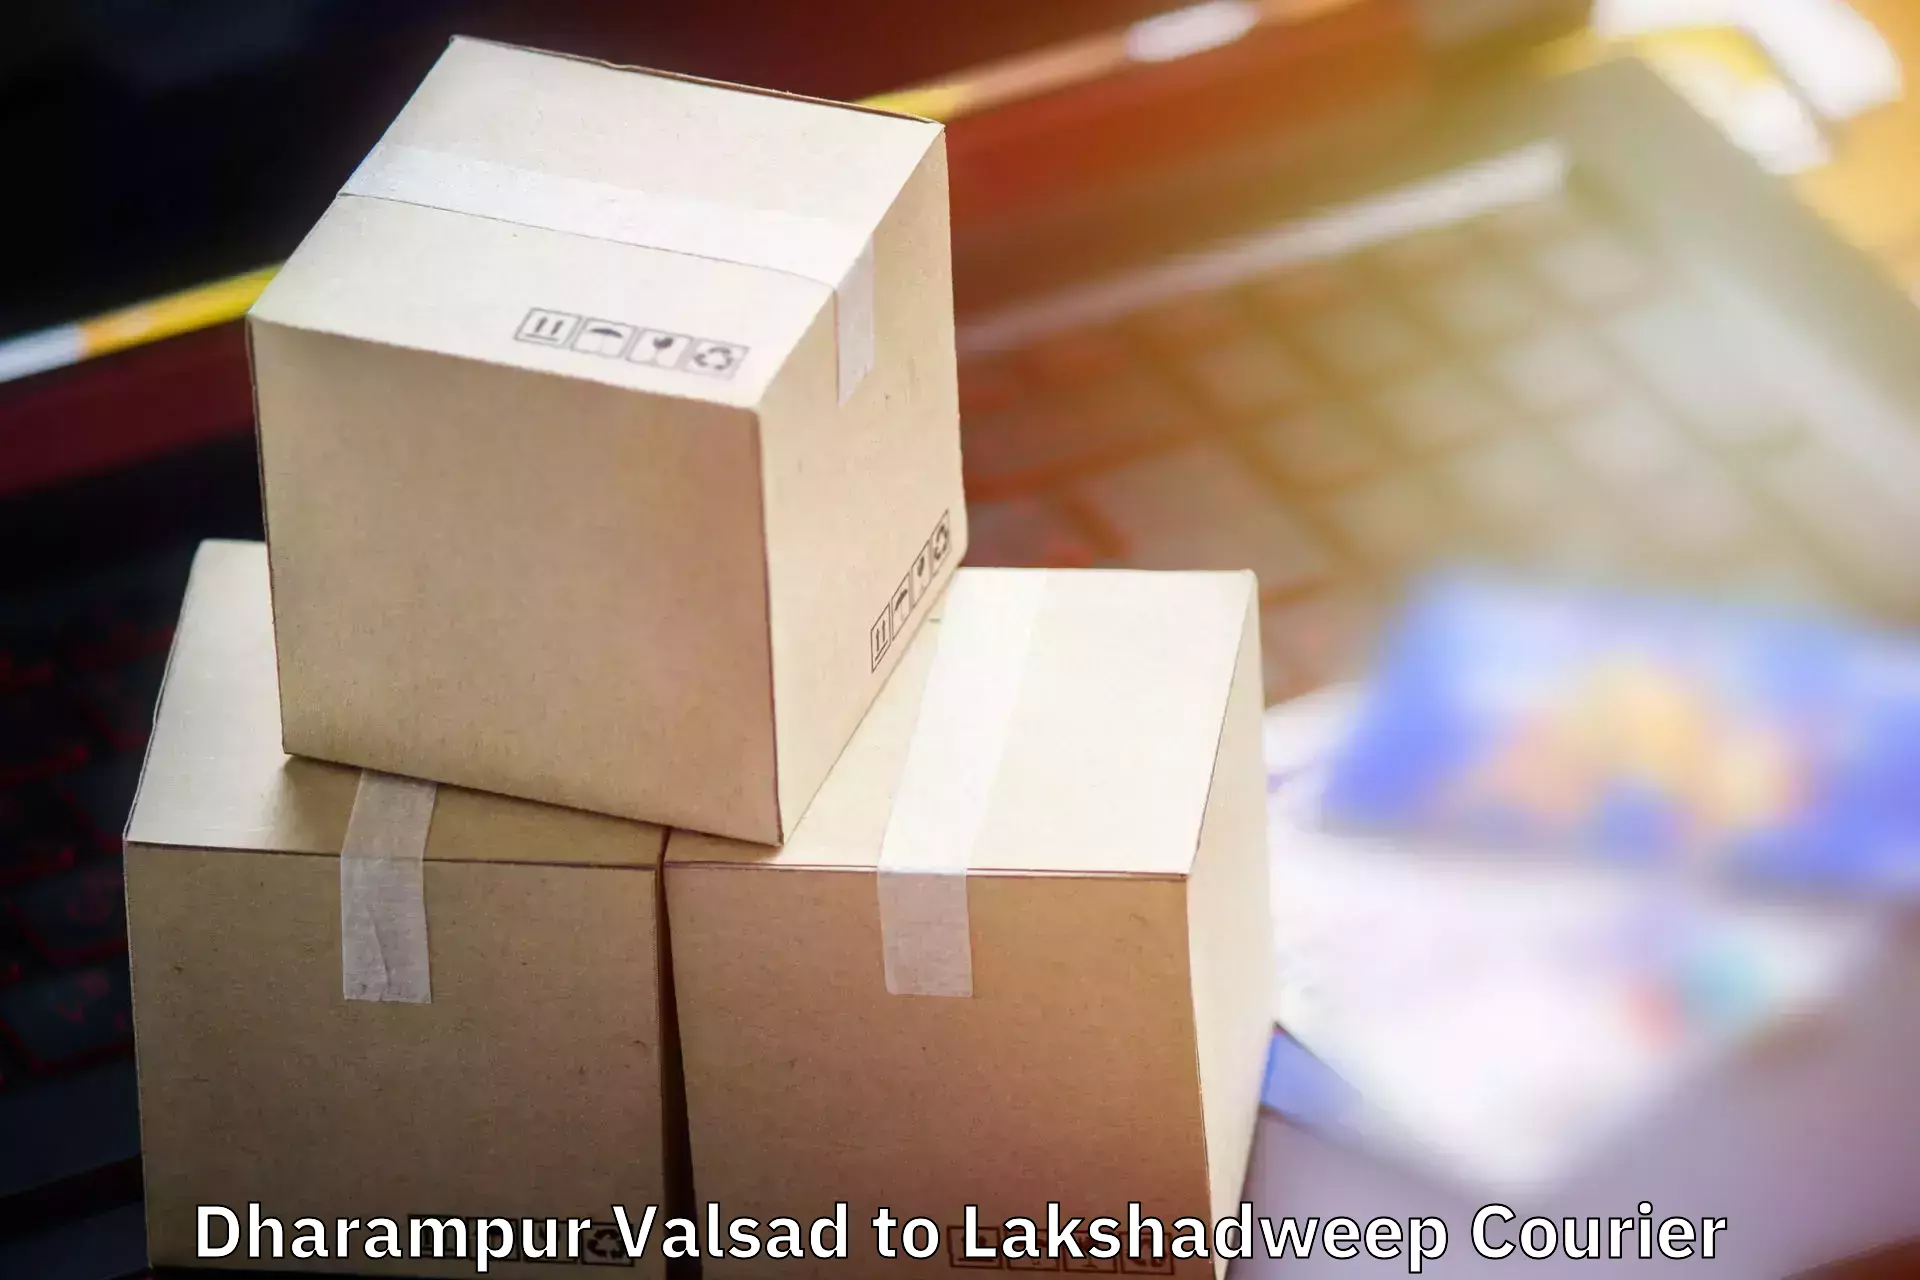 Luggage transport company Dharampur Valsad to Lakshadweep